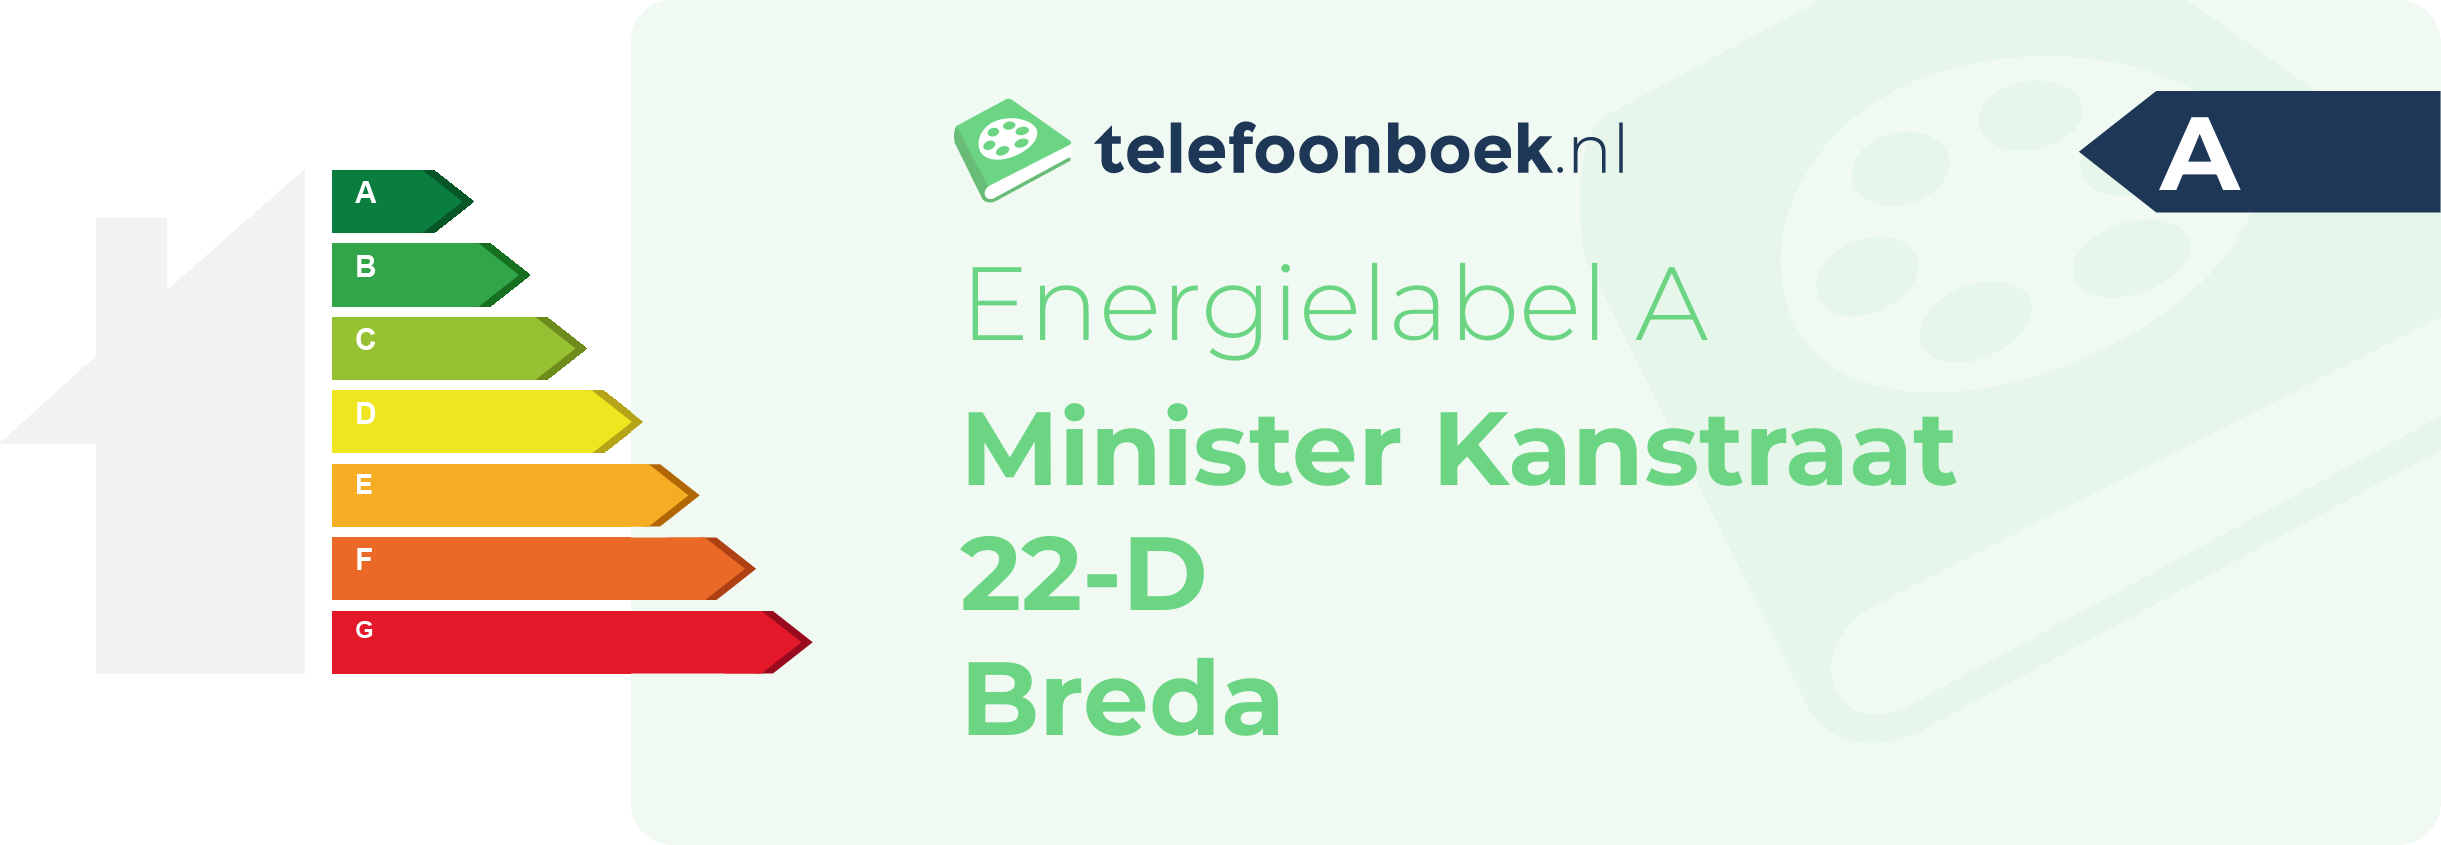 Energielabel Minister Kanstraat 22-D Breda